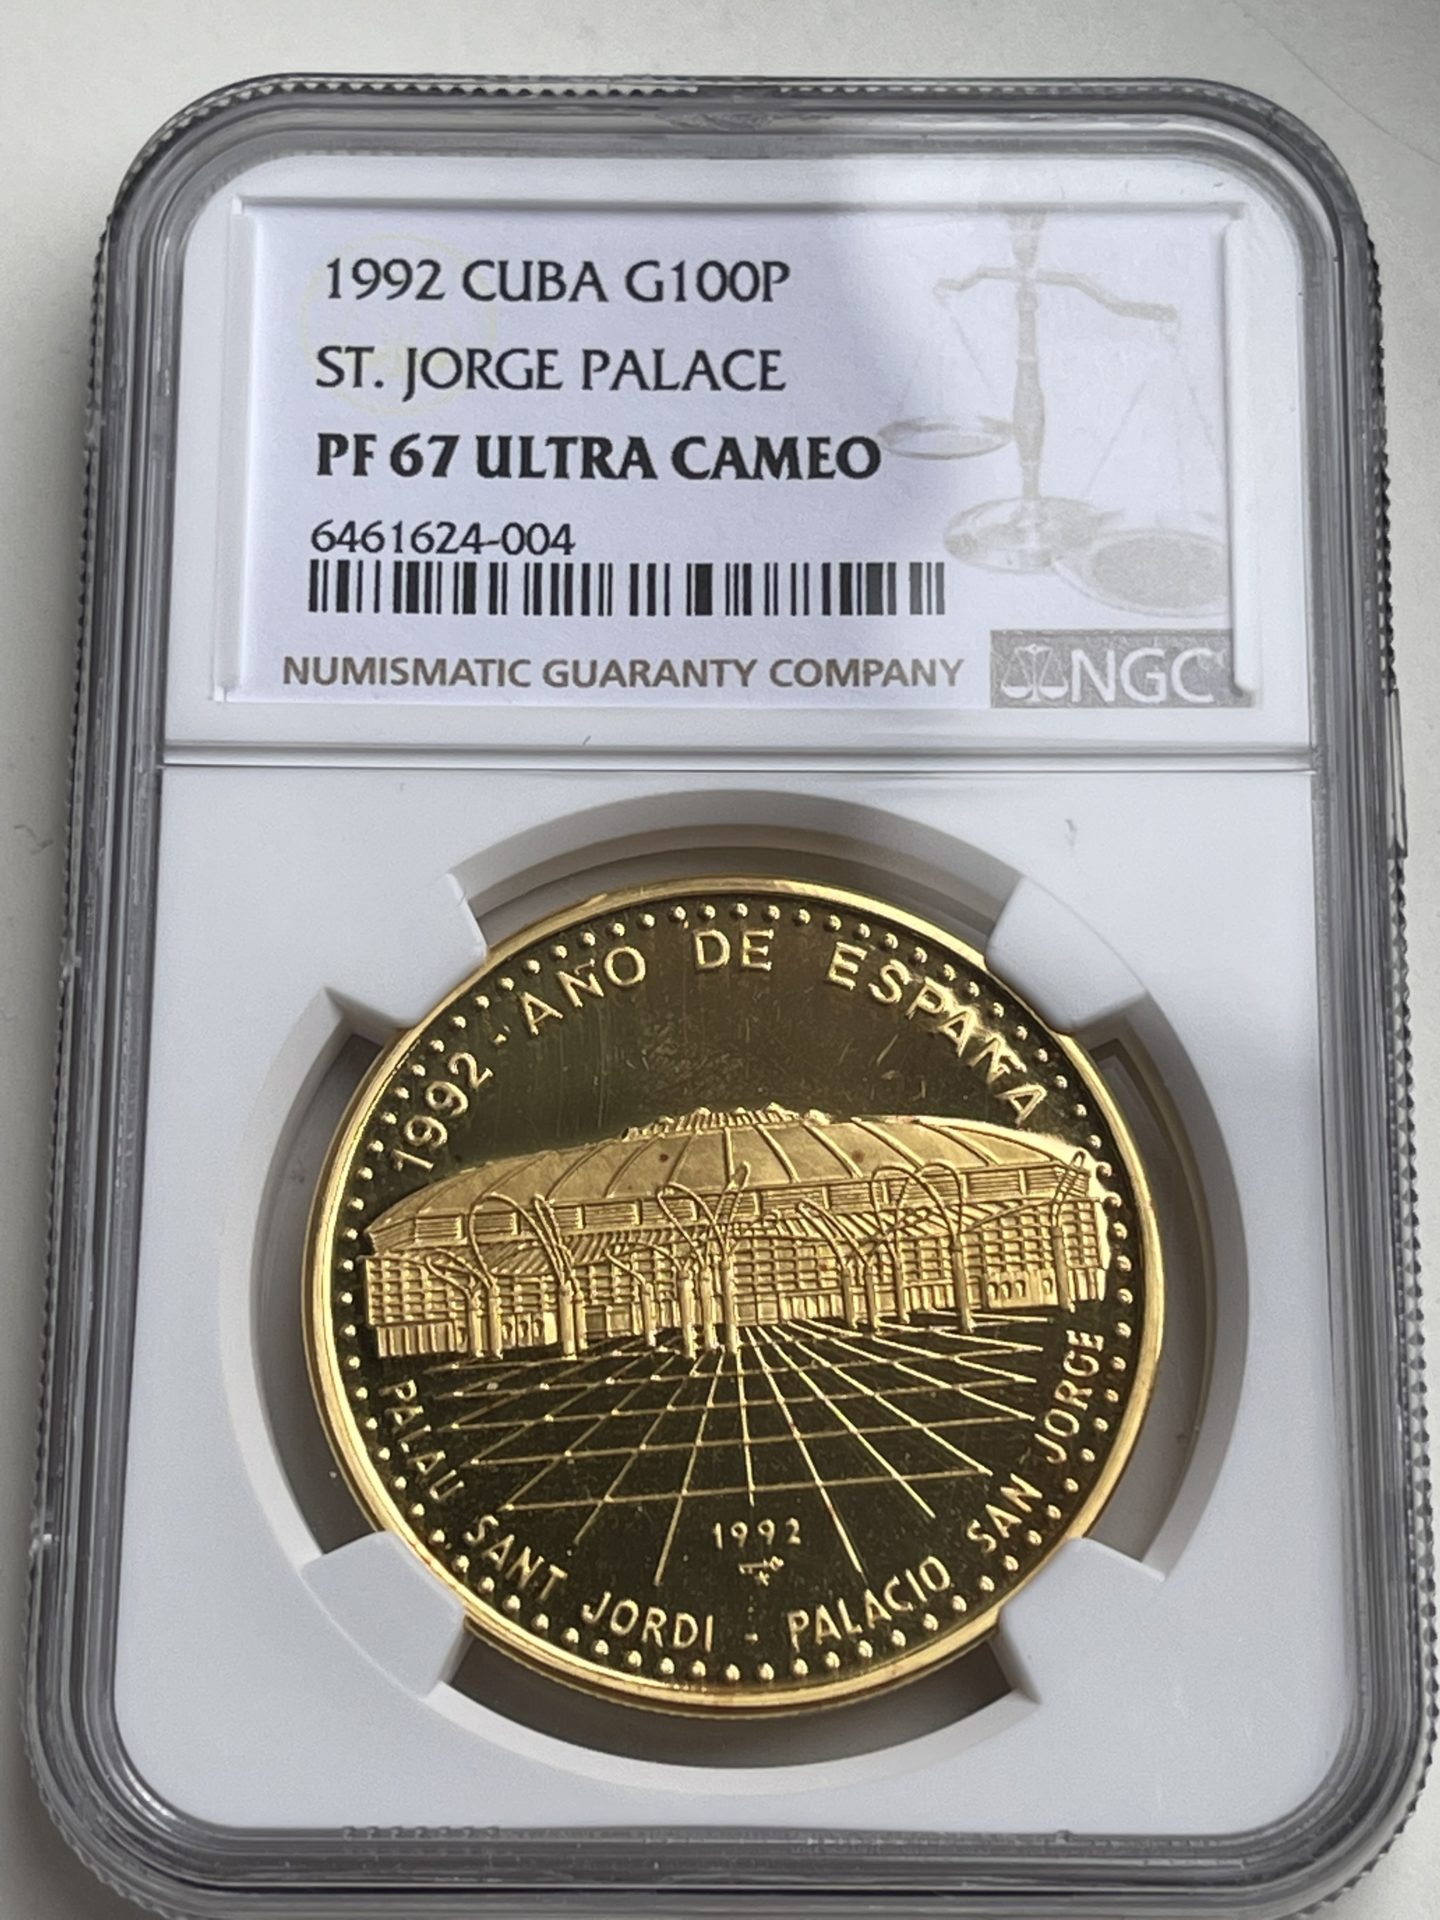 Cuba 100 Pesos 1992 Sankt Georg Palast